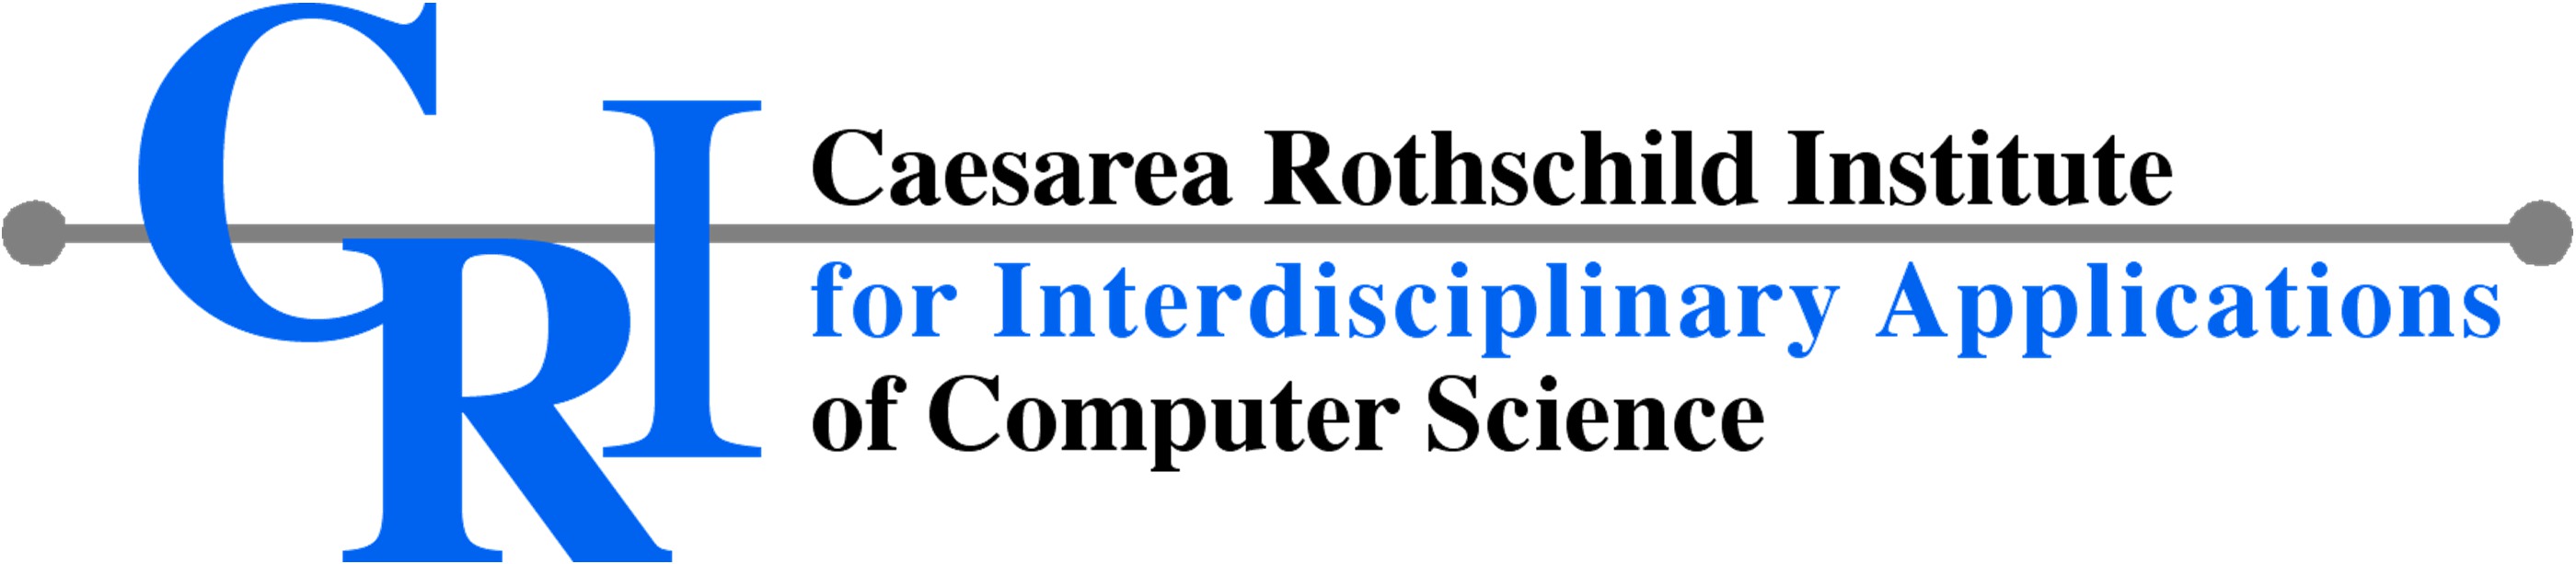 Caesarea Edmond Benjamin de Rothschild Foundation Institute for Interdisciplinary Applications of Computer Science logo